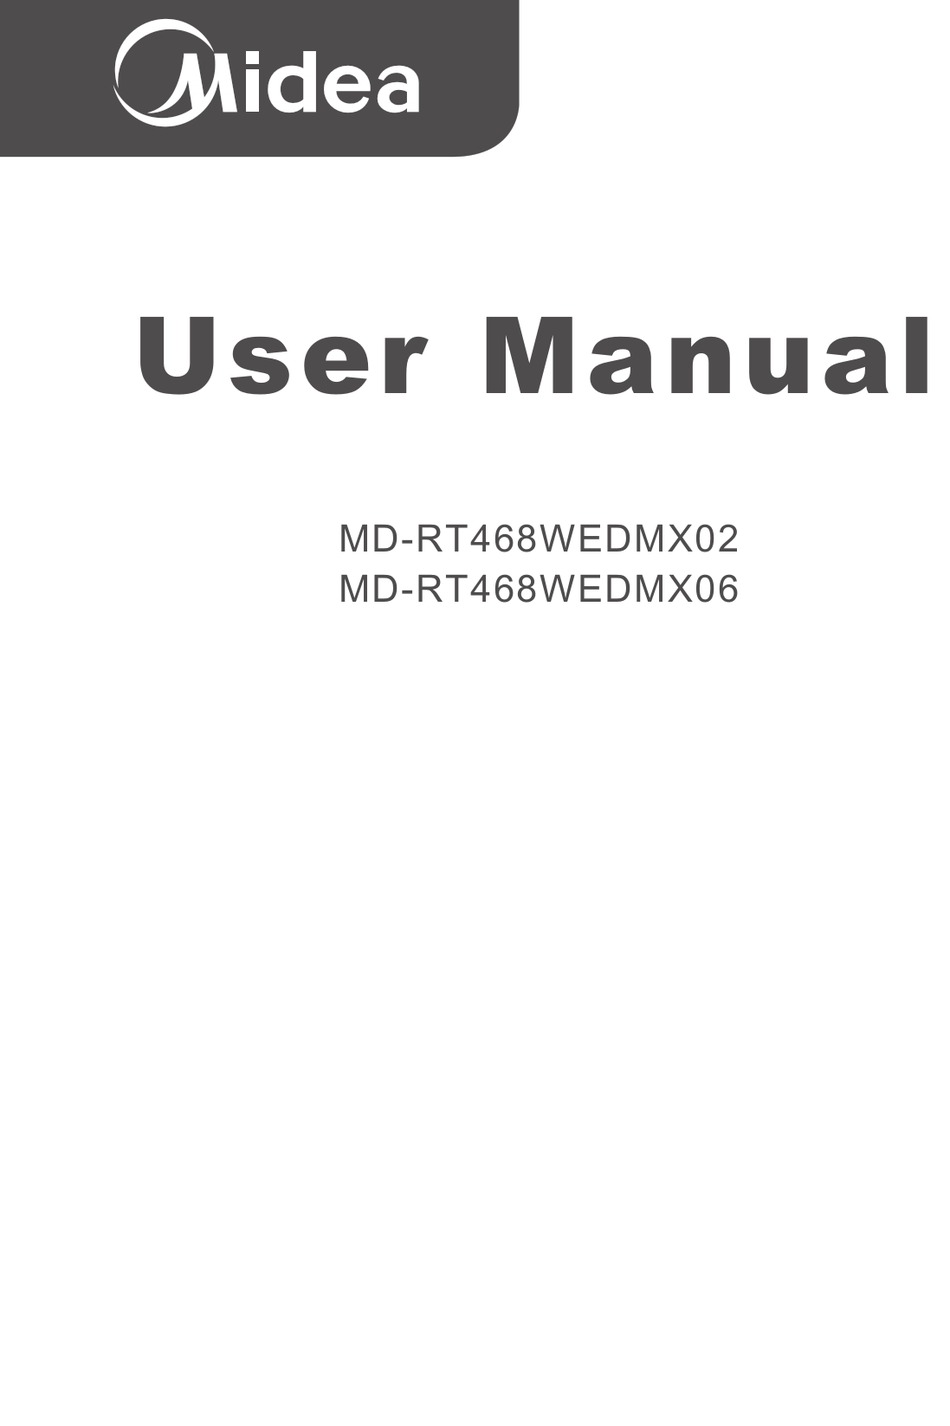 midea-md-rt468wedmx02-user-manual-pdf-download-manualslib